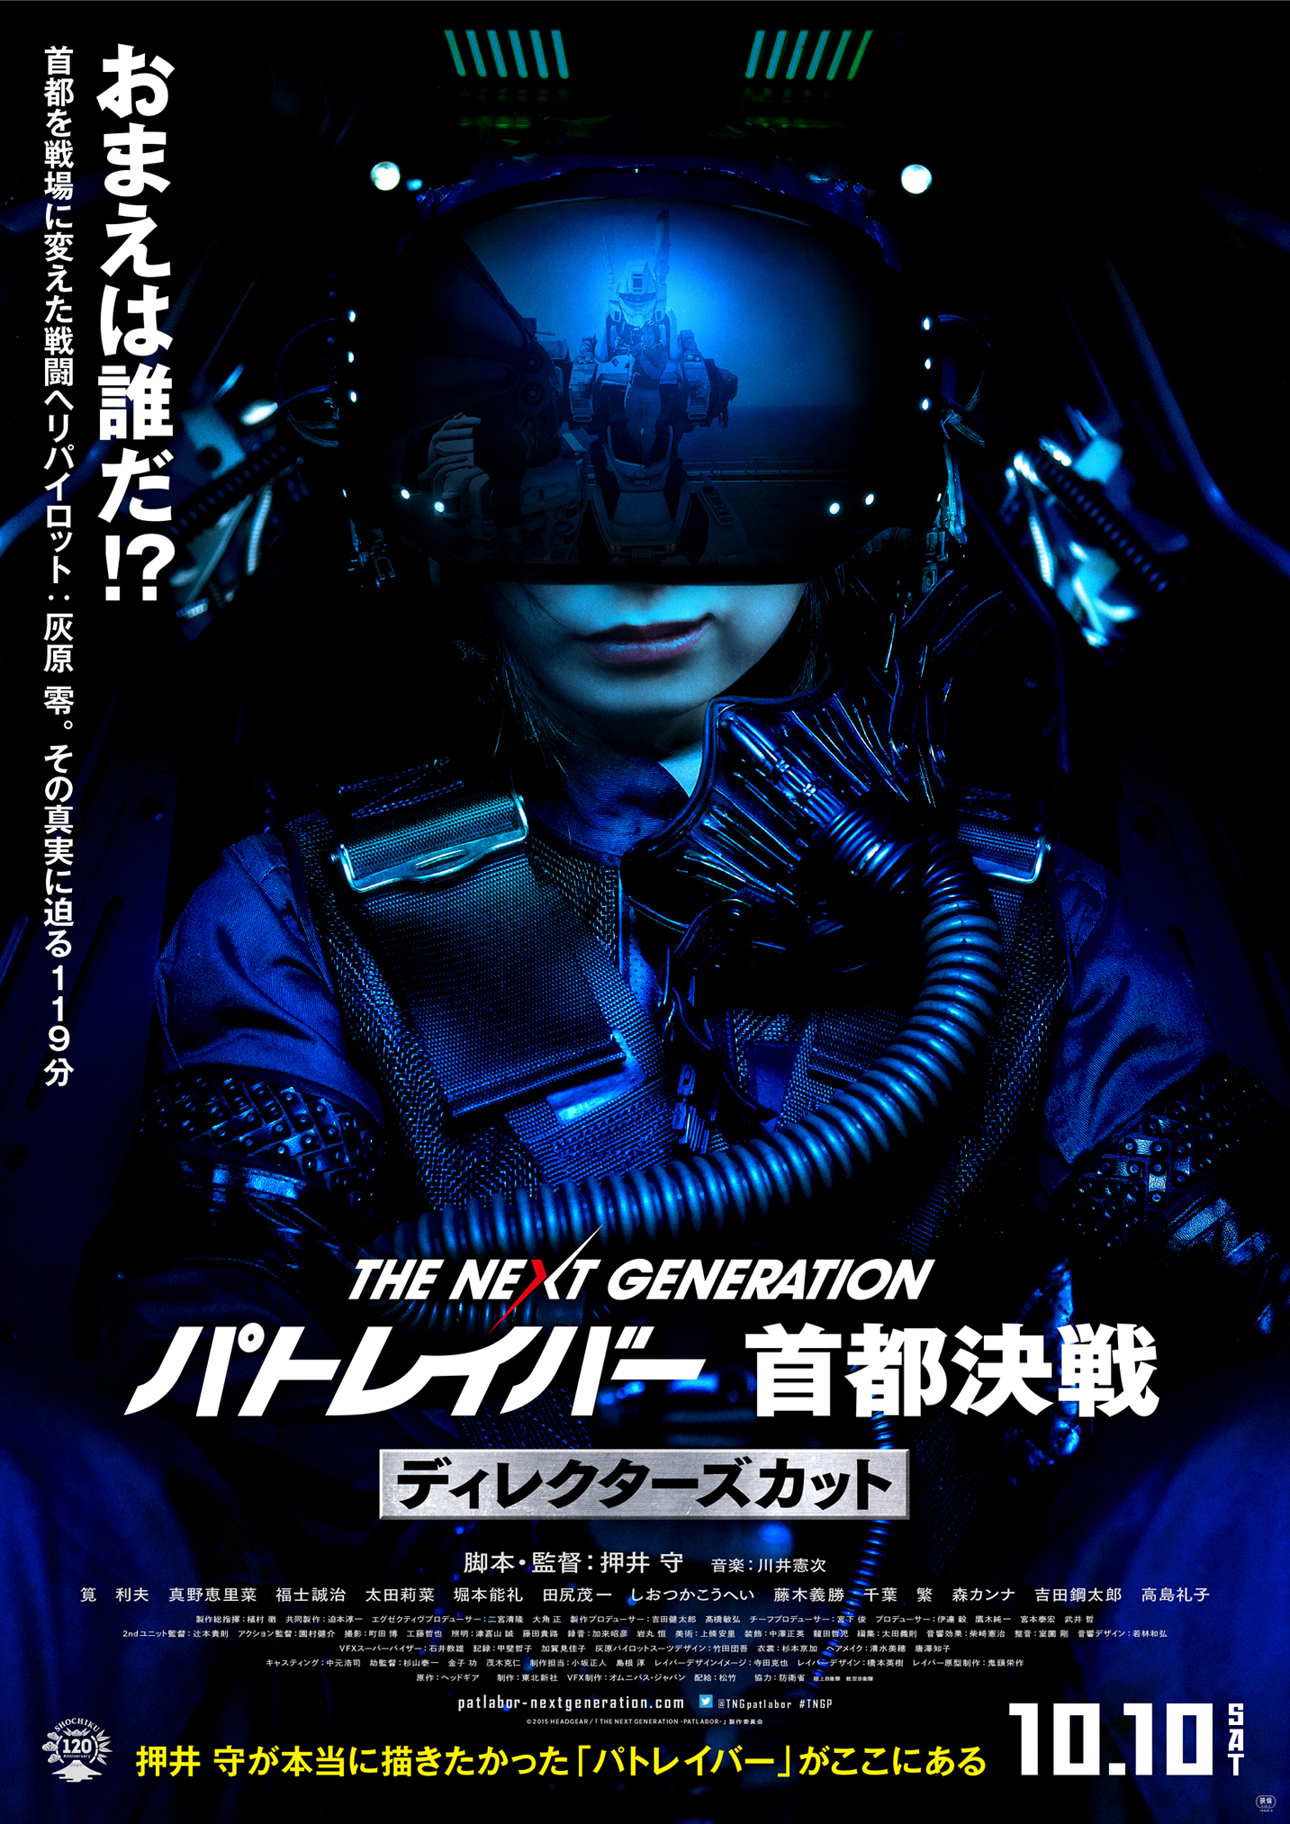 Tokyo wars. The next Generation: Patlabor.